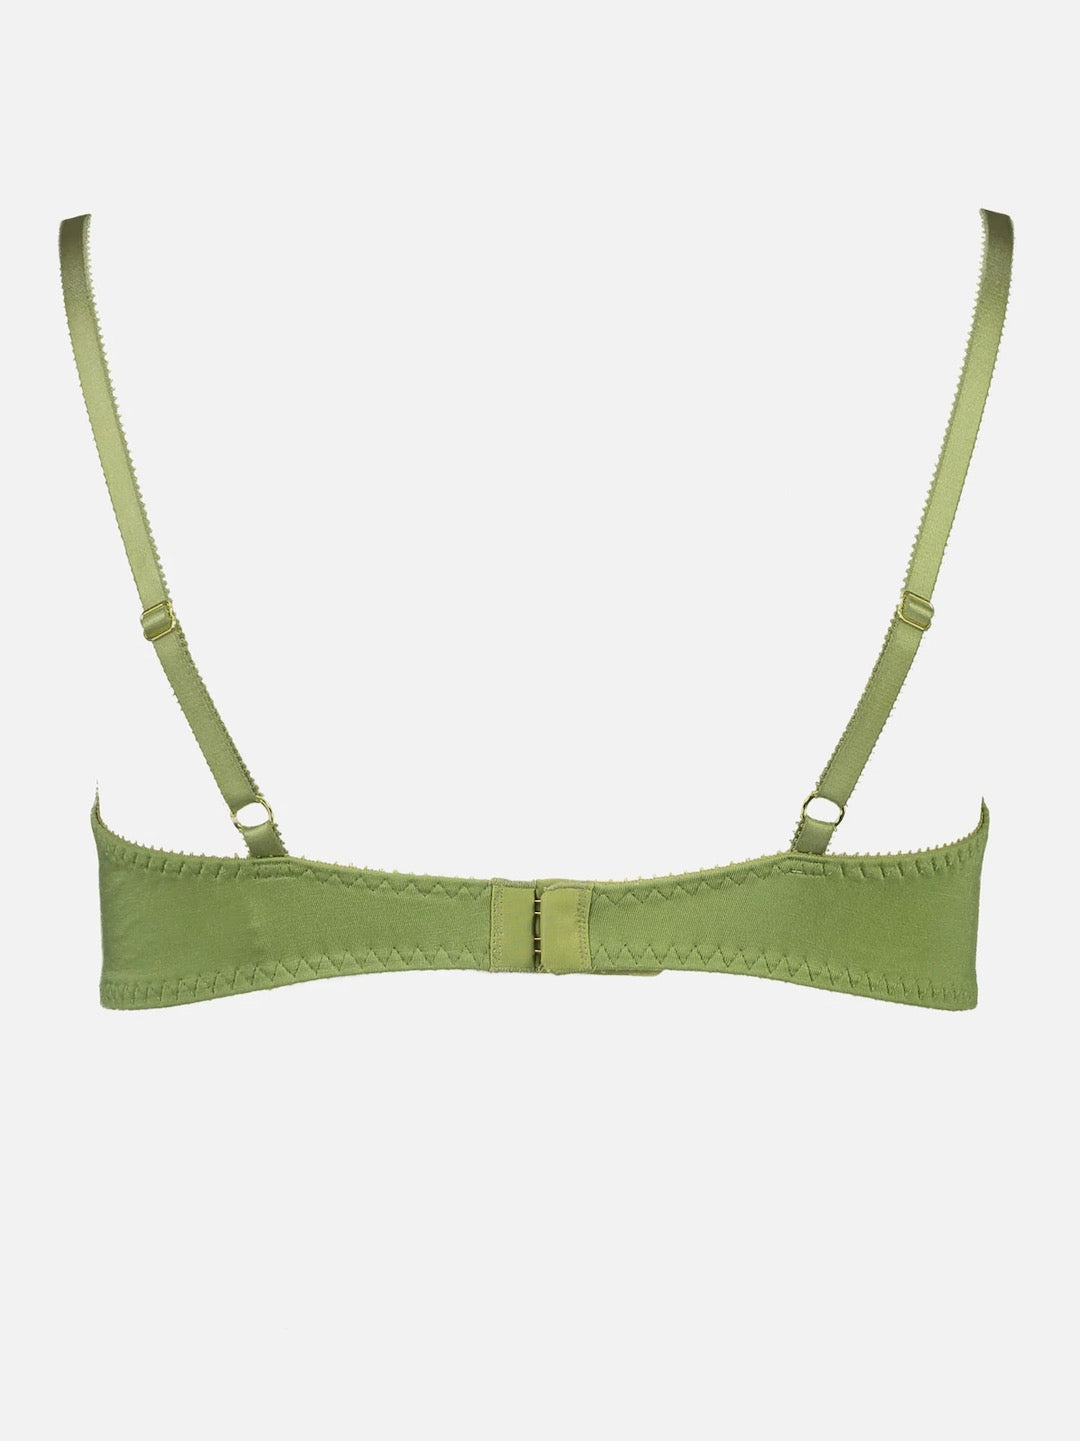 A green Angela Bra – Olive bikini top with straps by Videris.